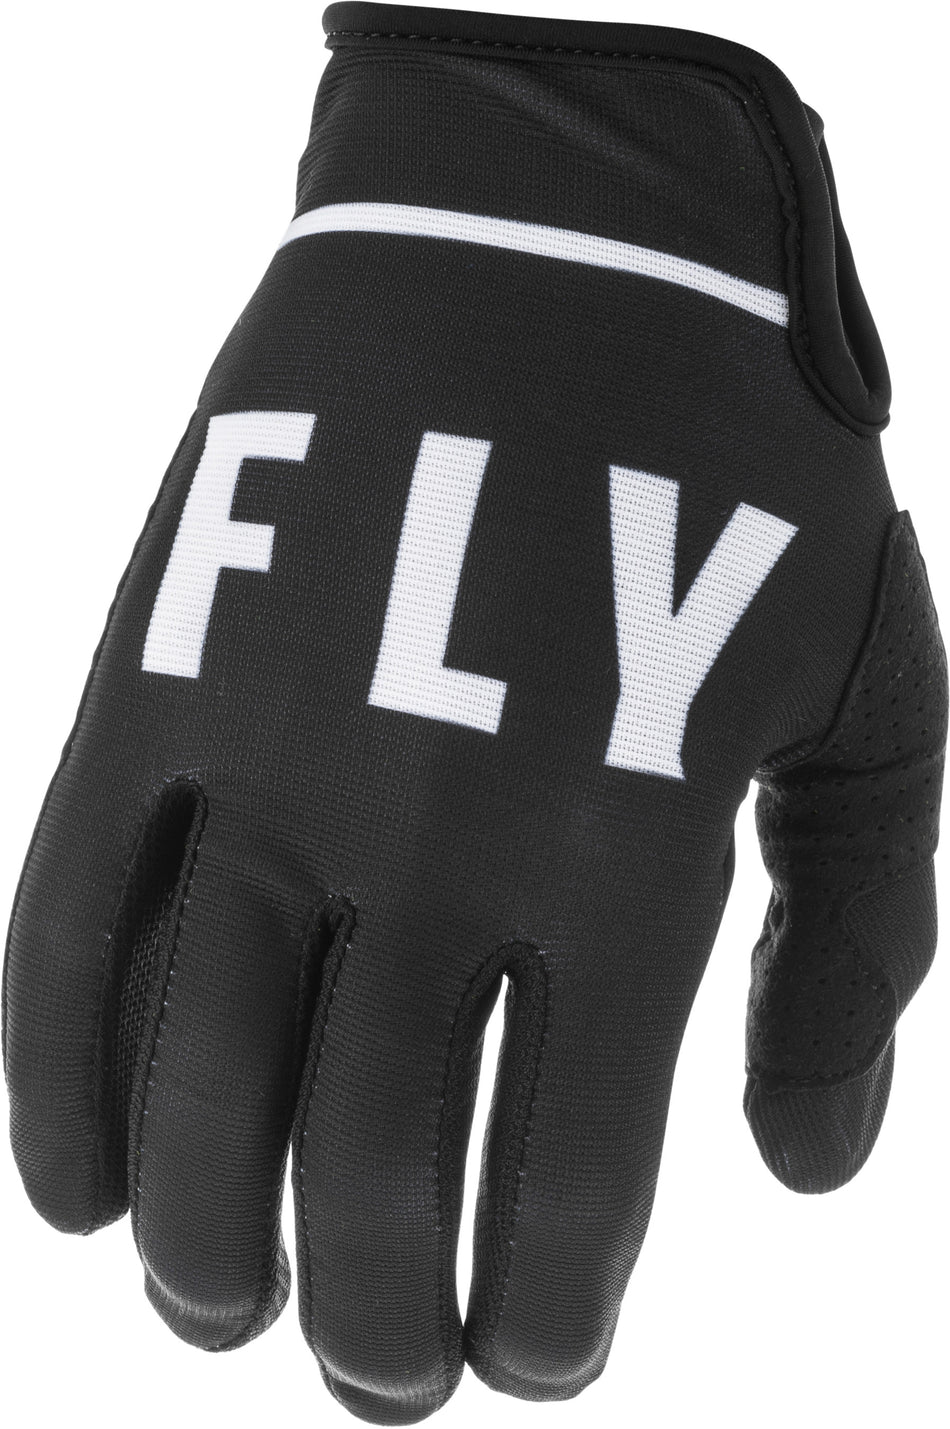 FLY RACING Lite Gloves Black/White Sz 07 373-71107